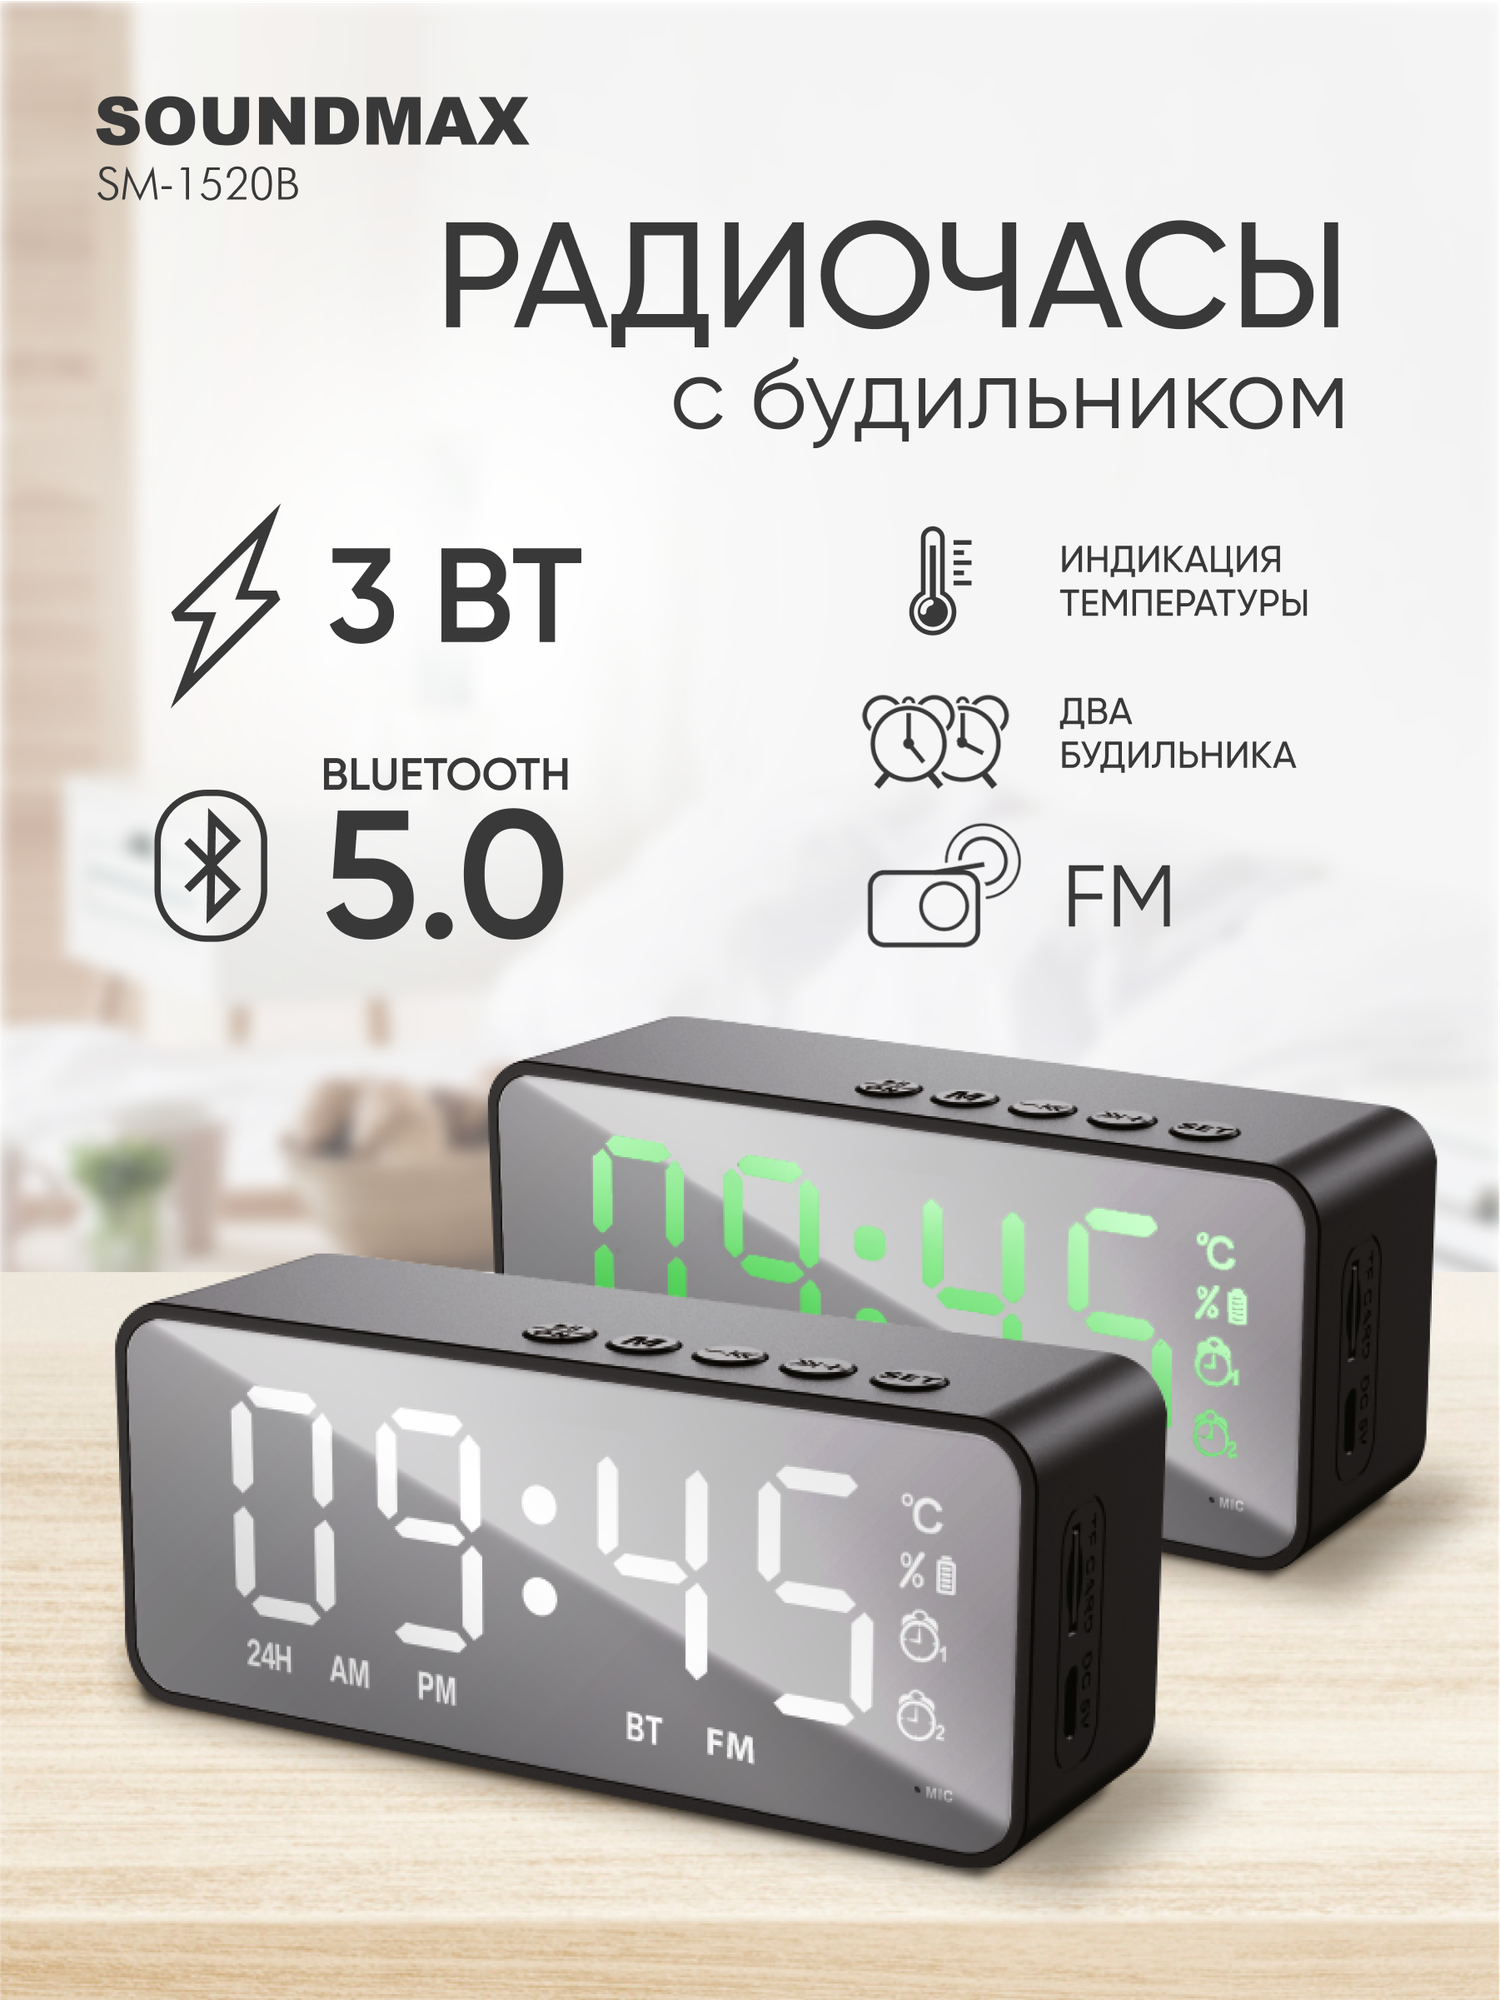 Радио-часы Soundmax SM-1520B Black/White